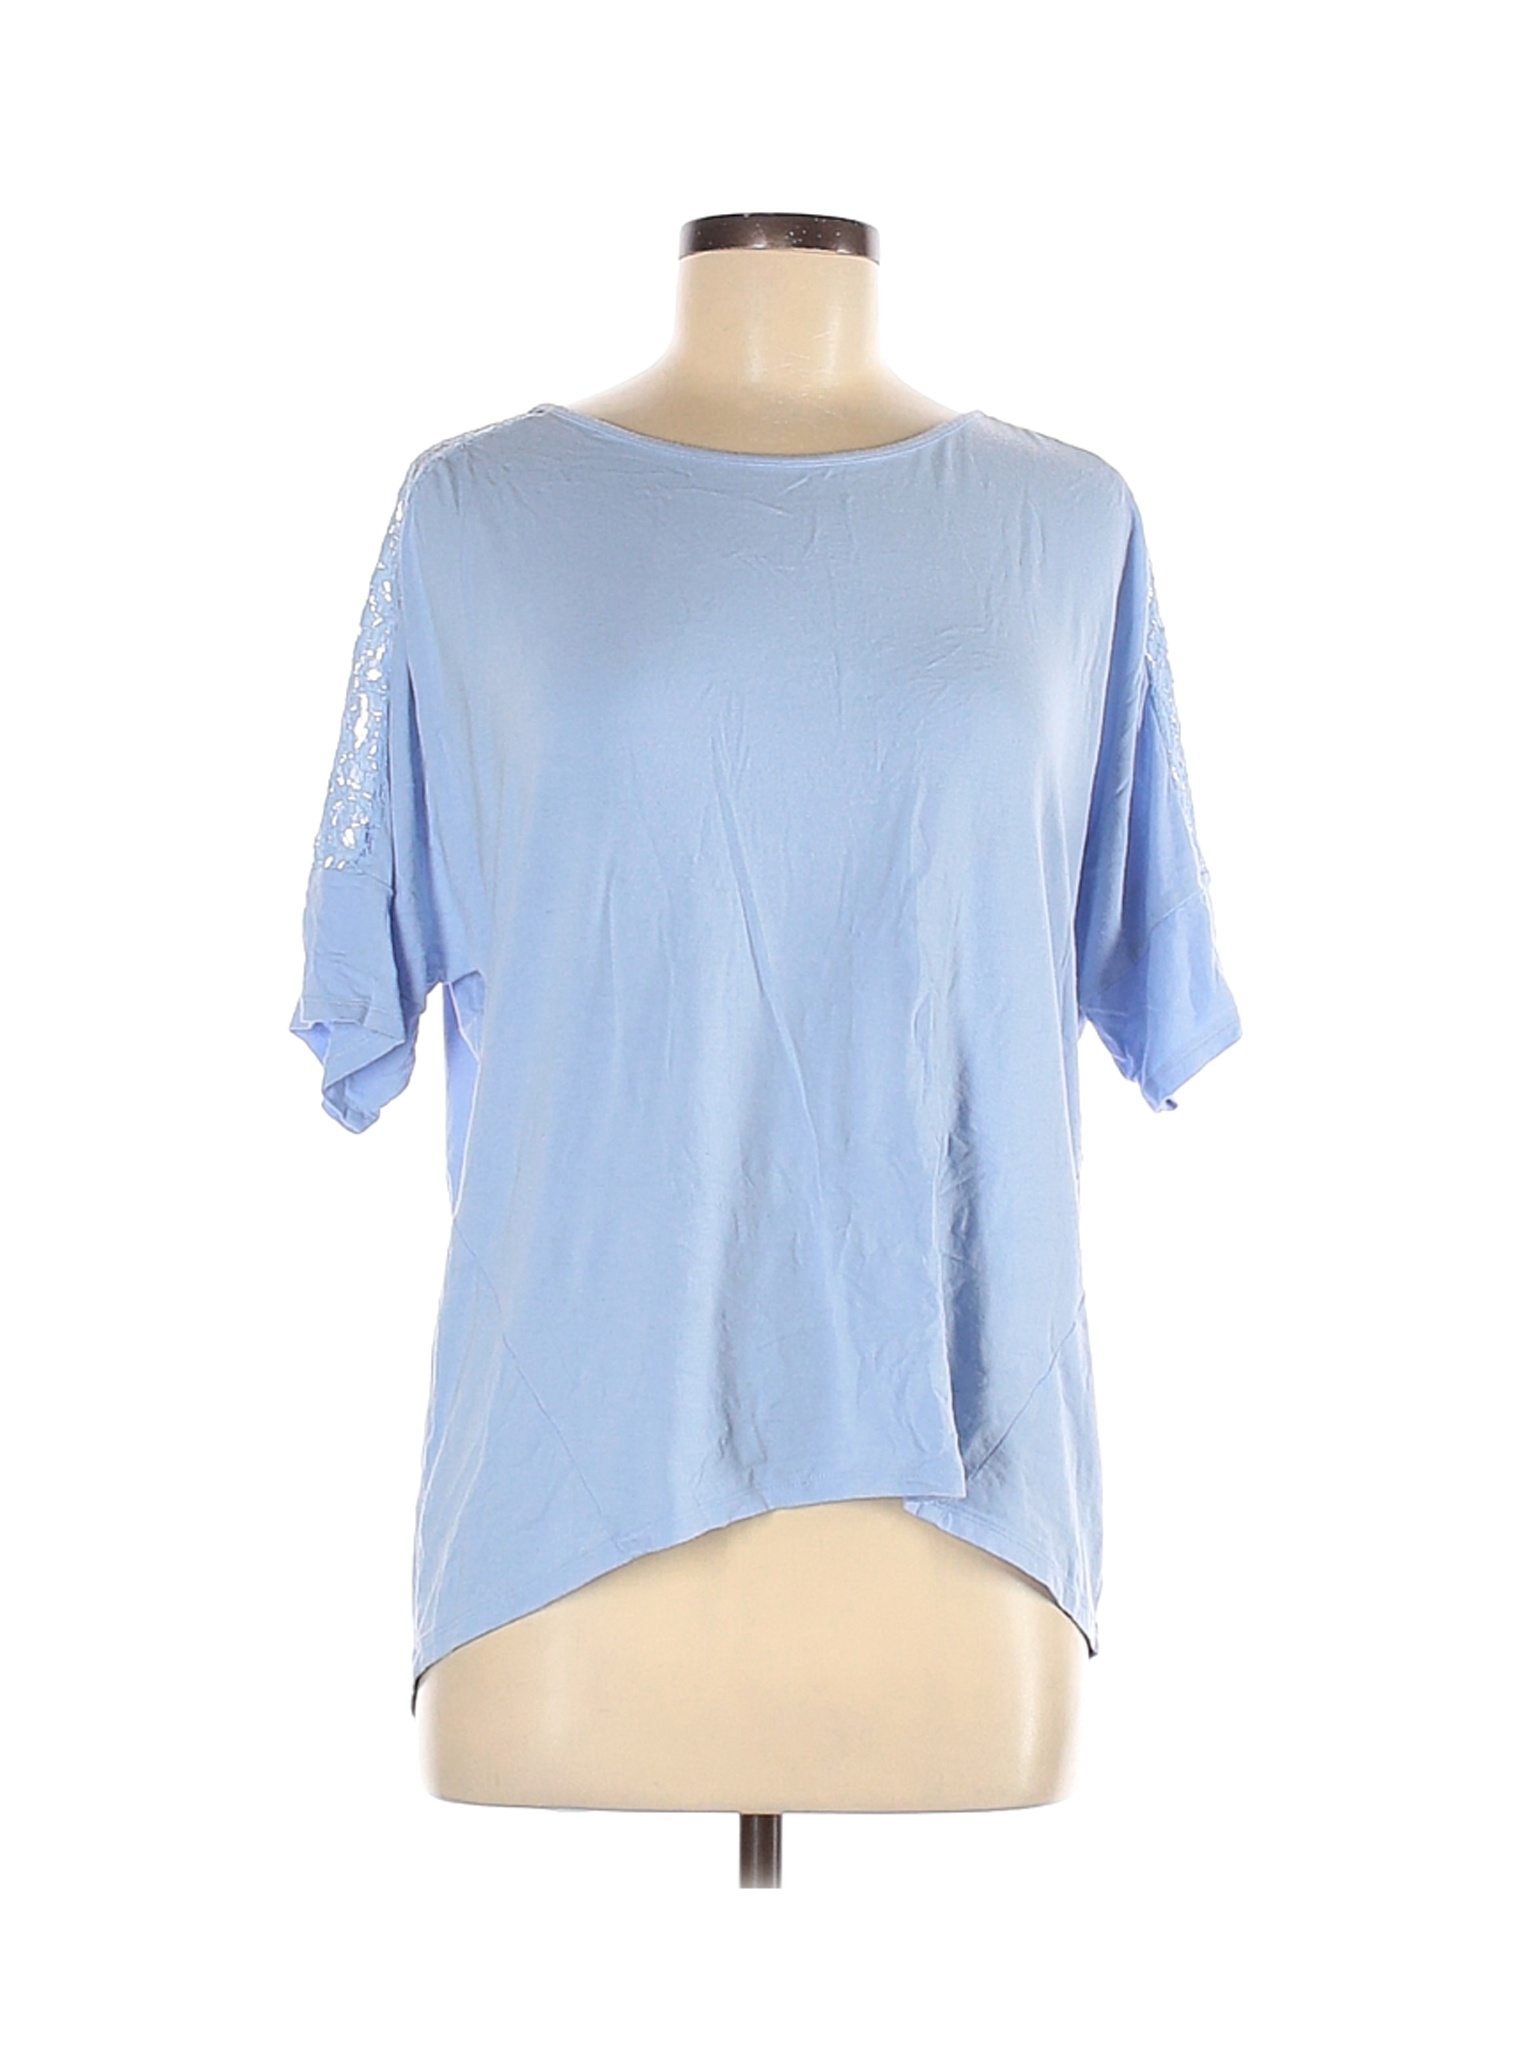 Chico's Women Blue Short Sleeve Top M | eBay